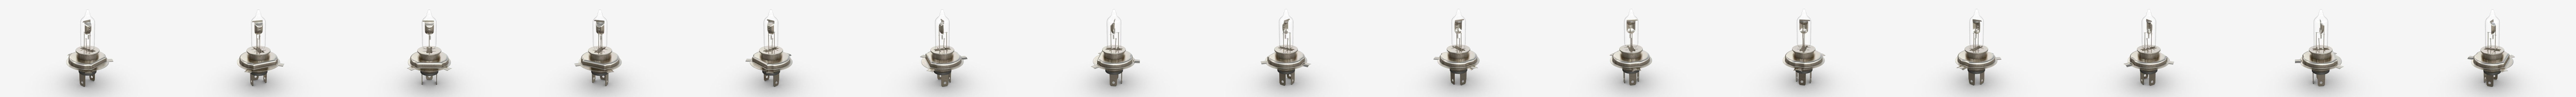 Car Headlight Lamp - Buy Royalty Free 3D model by HQ3DMOD